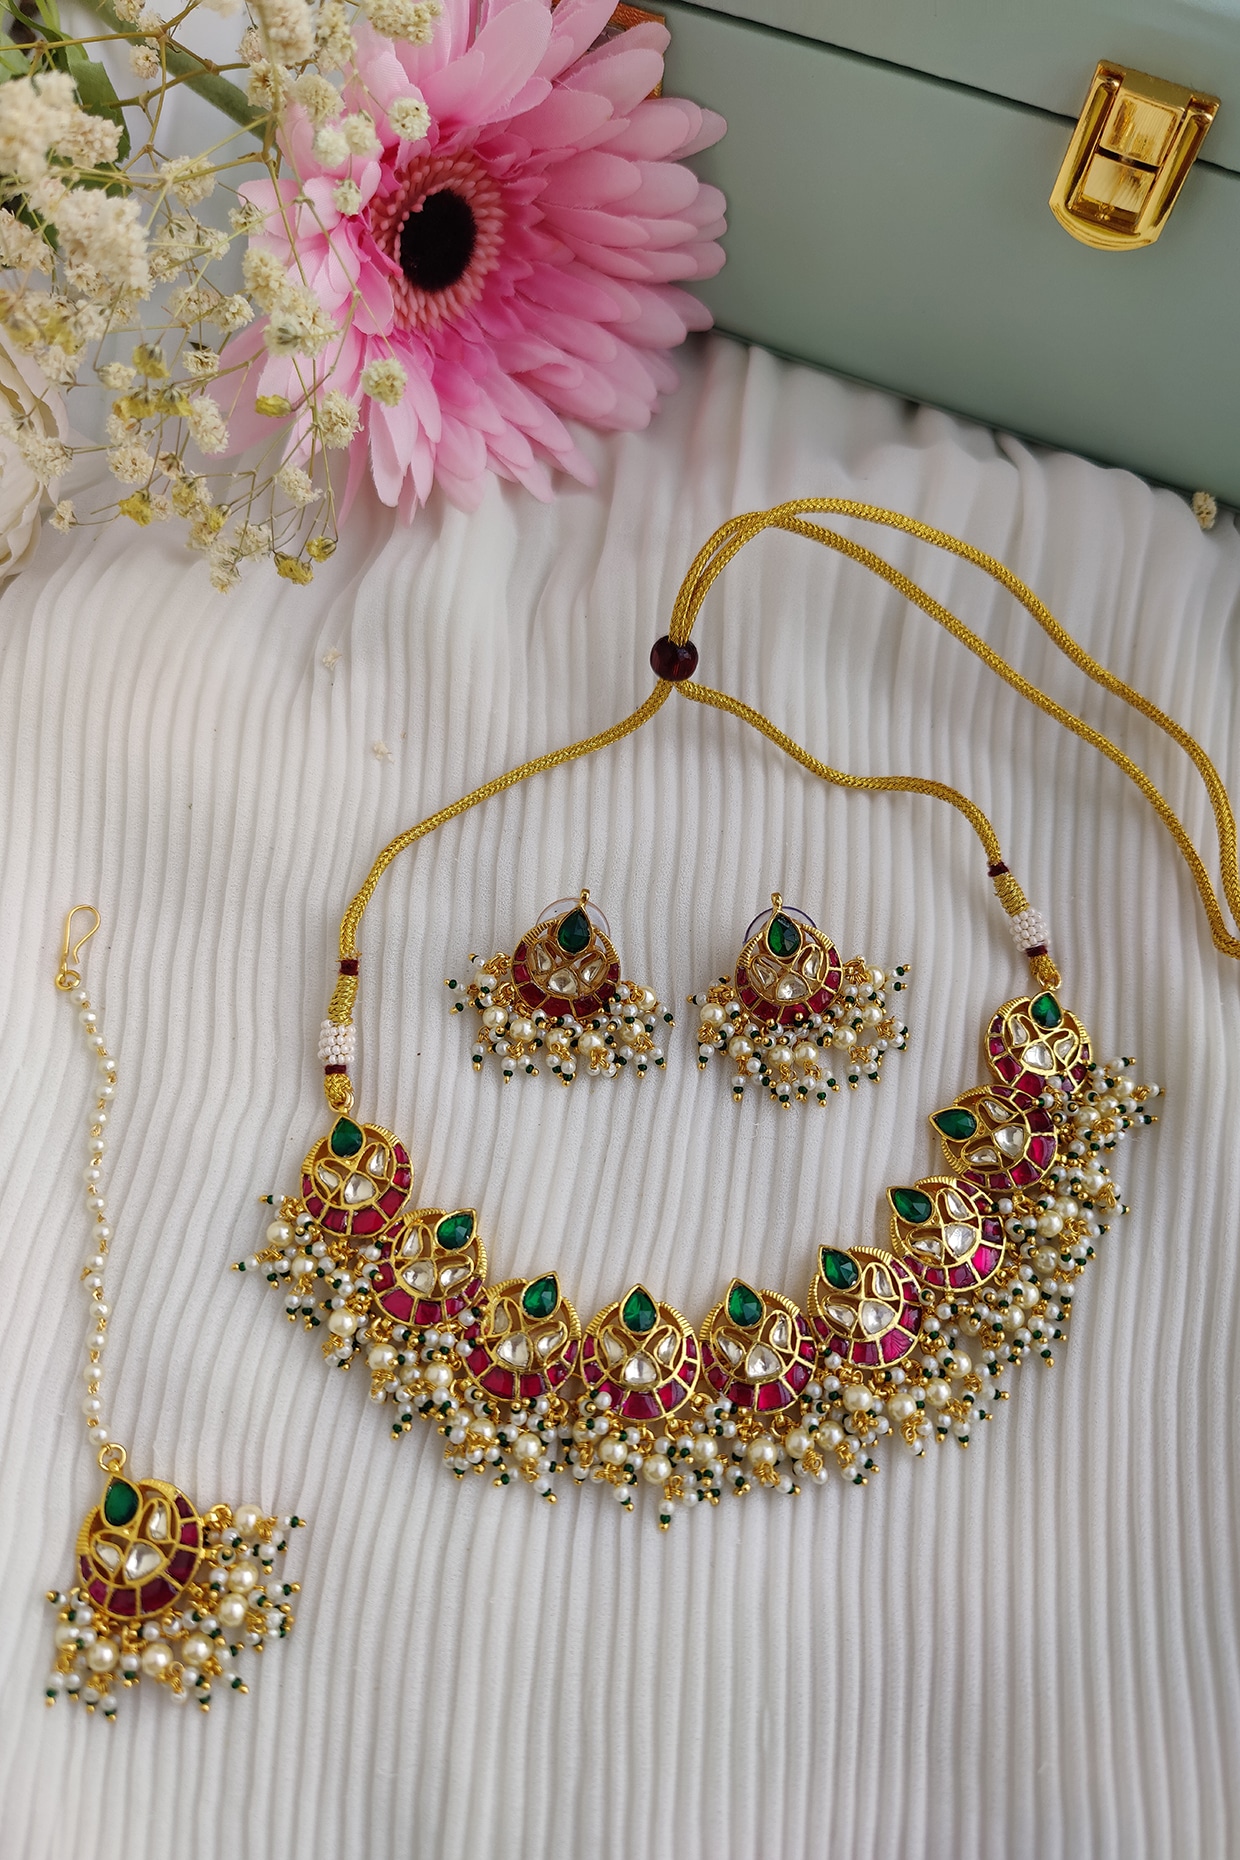 Manhasset Jewelers - Beautiful platinum diamond and ruby choker necklace